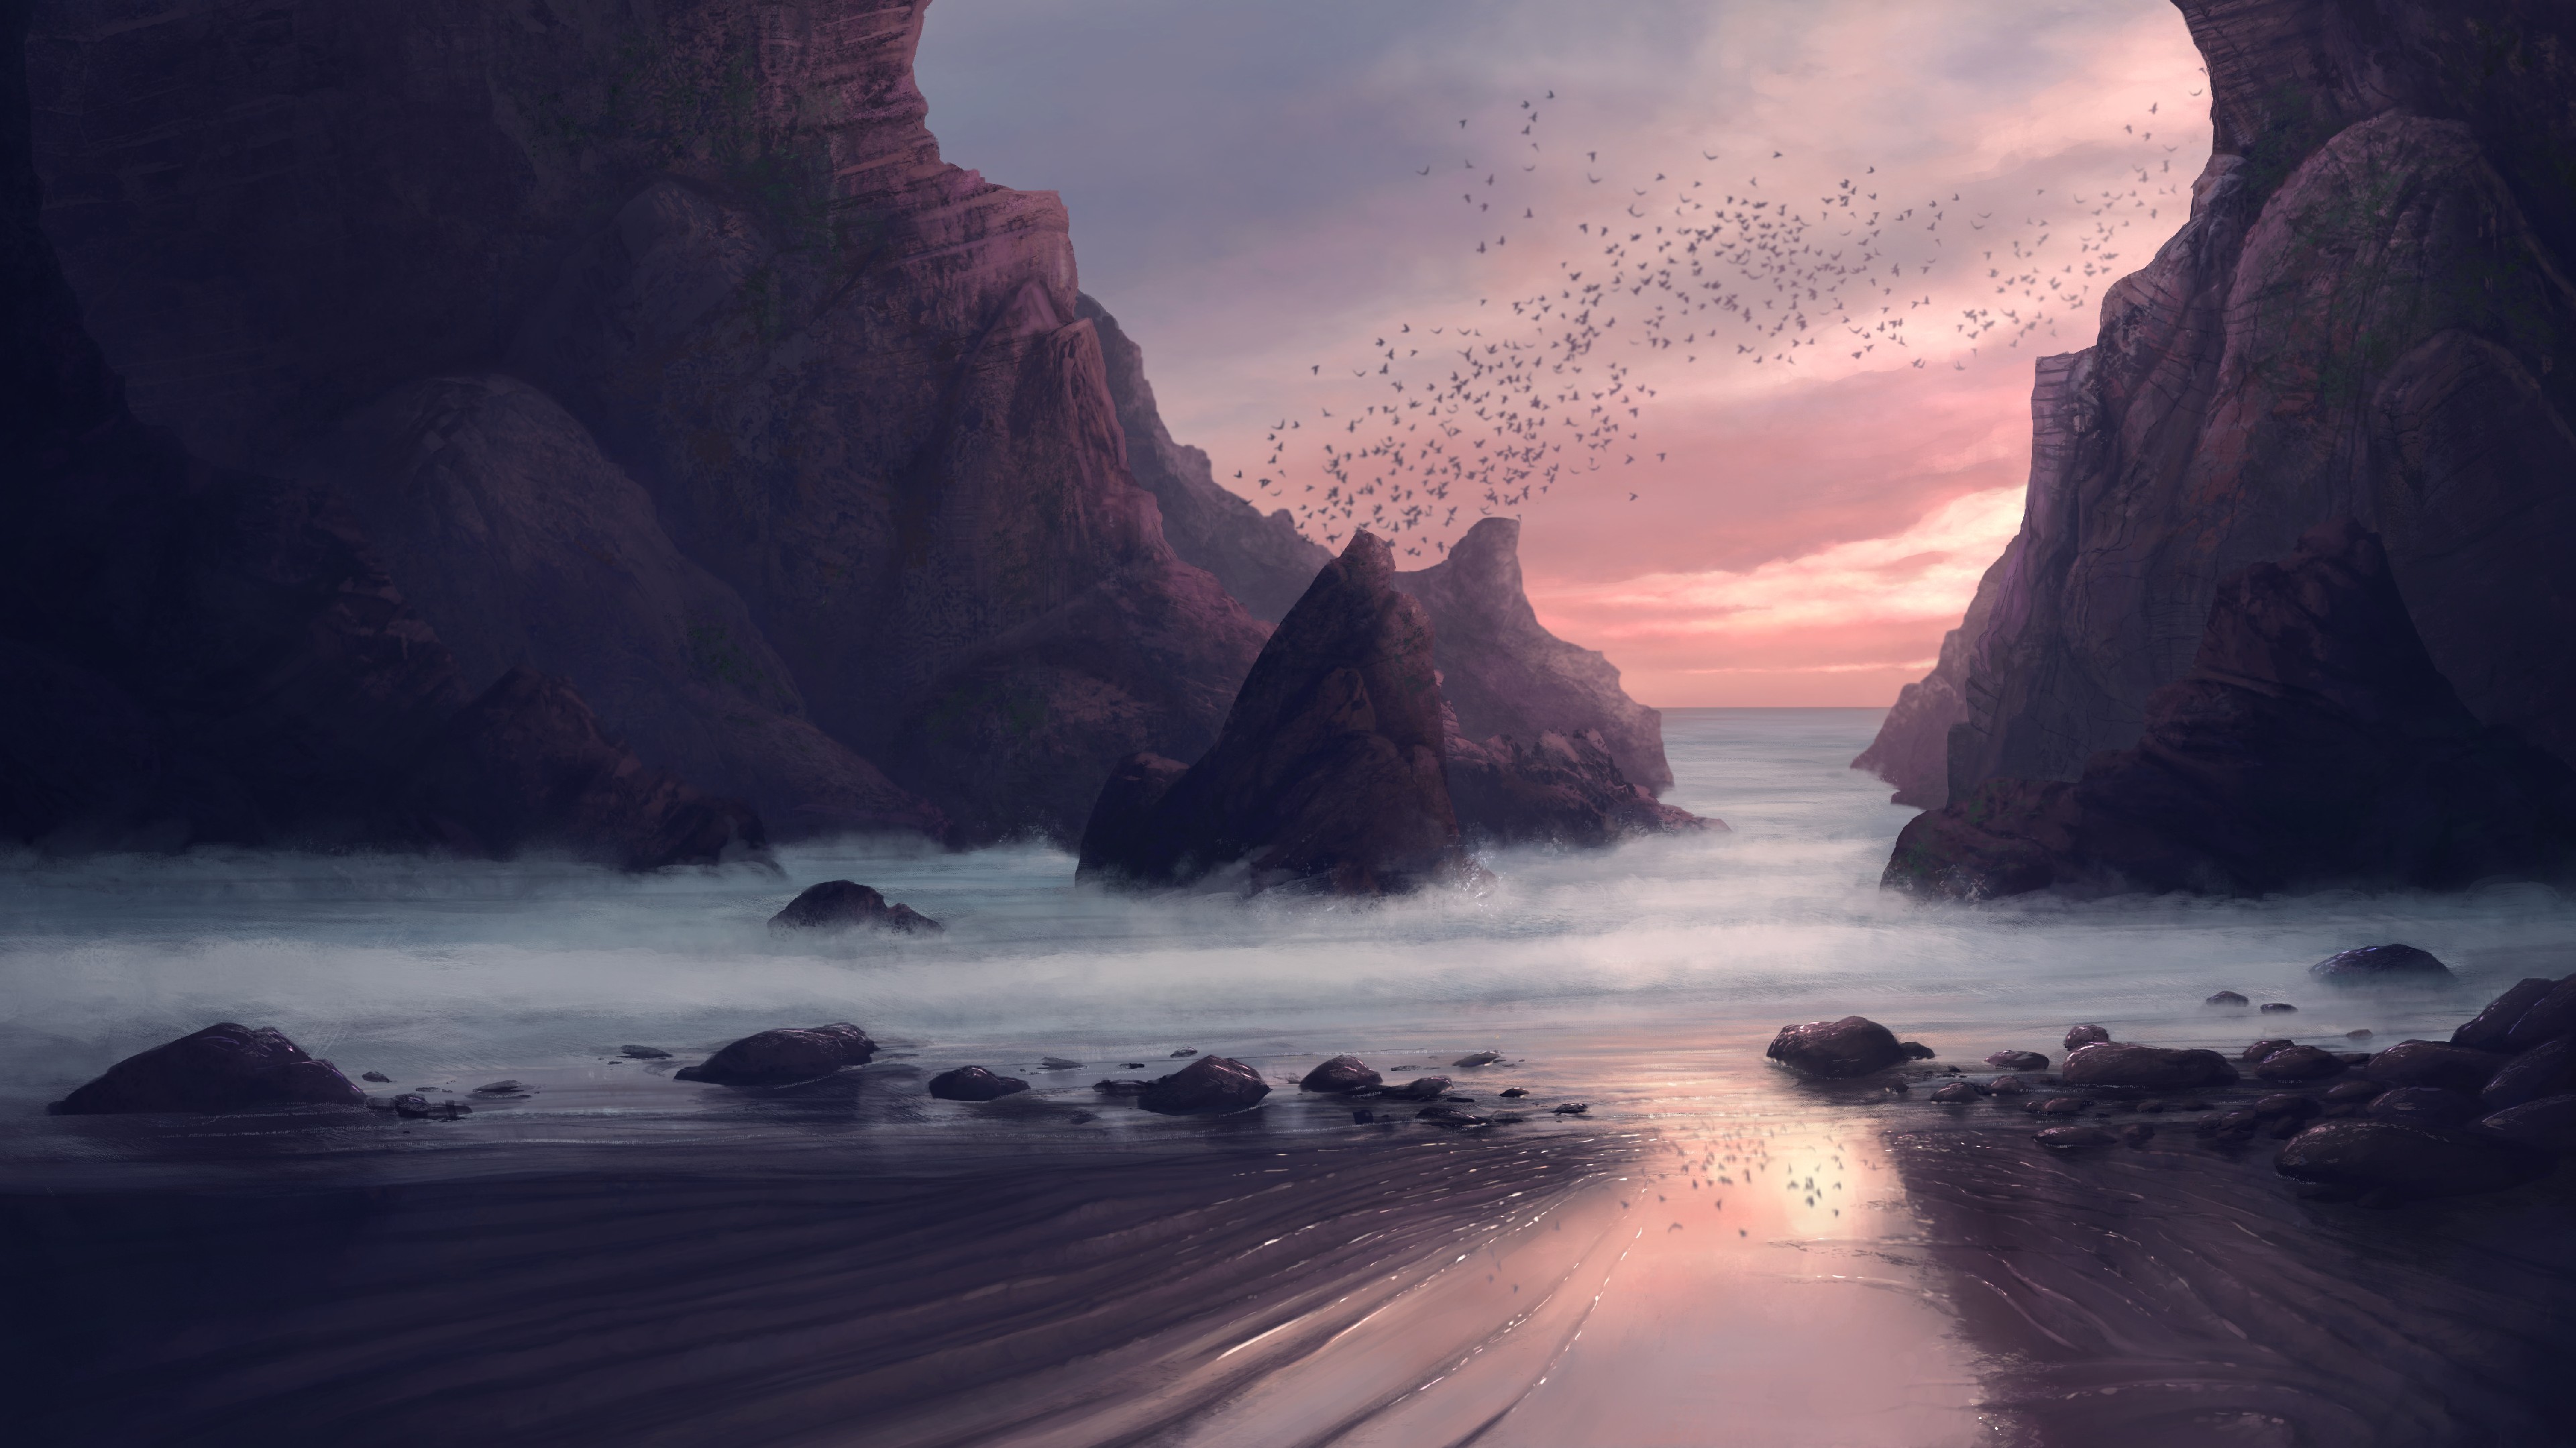 Ocean Rocks at Sunset by Zuzanna Trząska